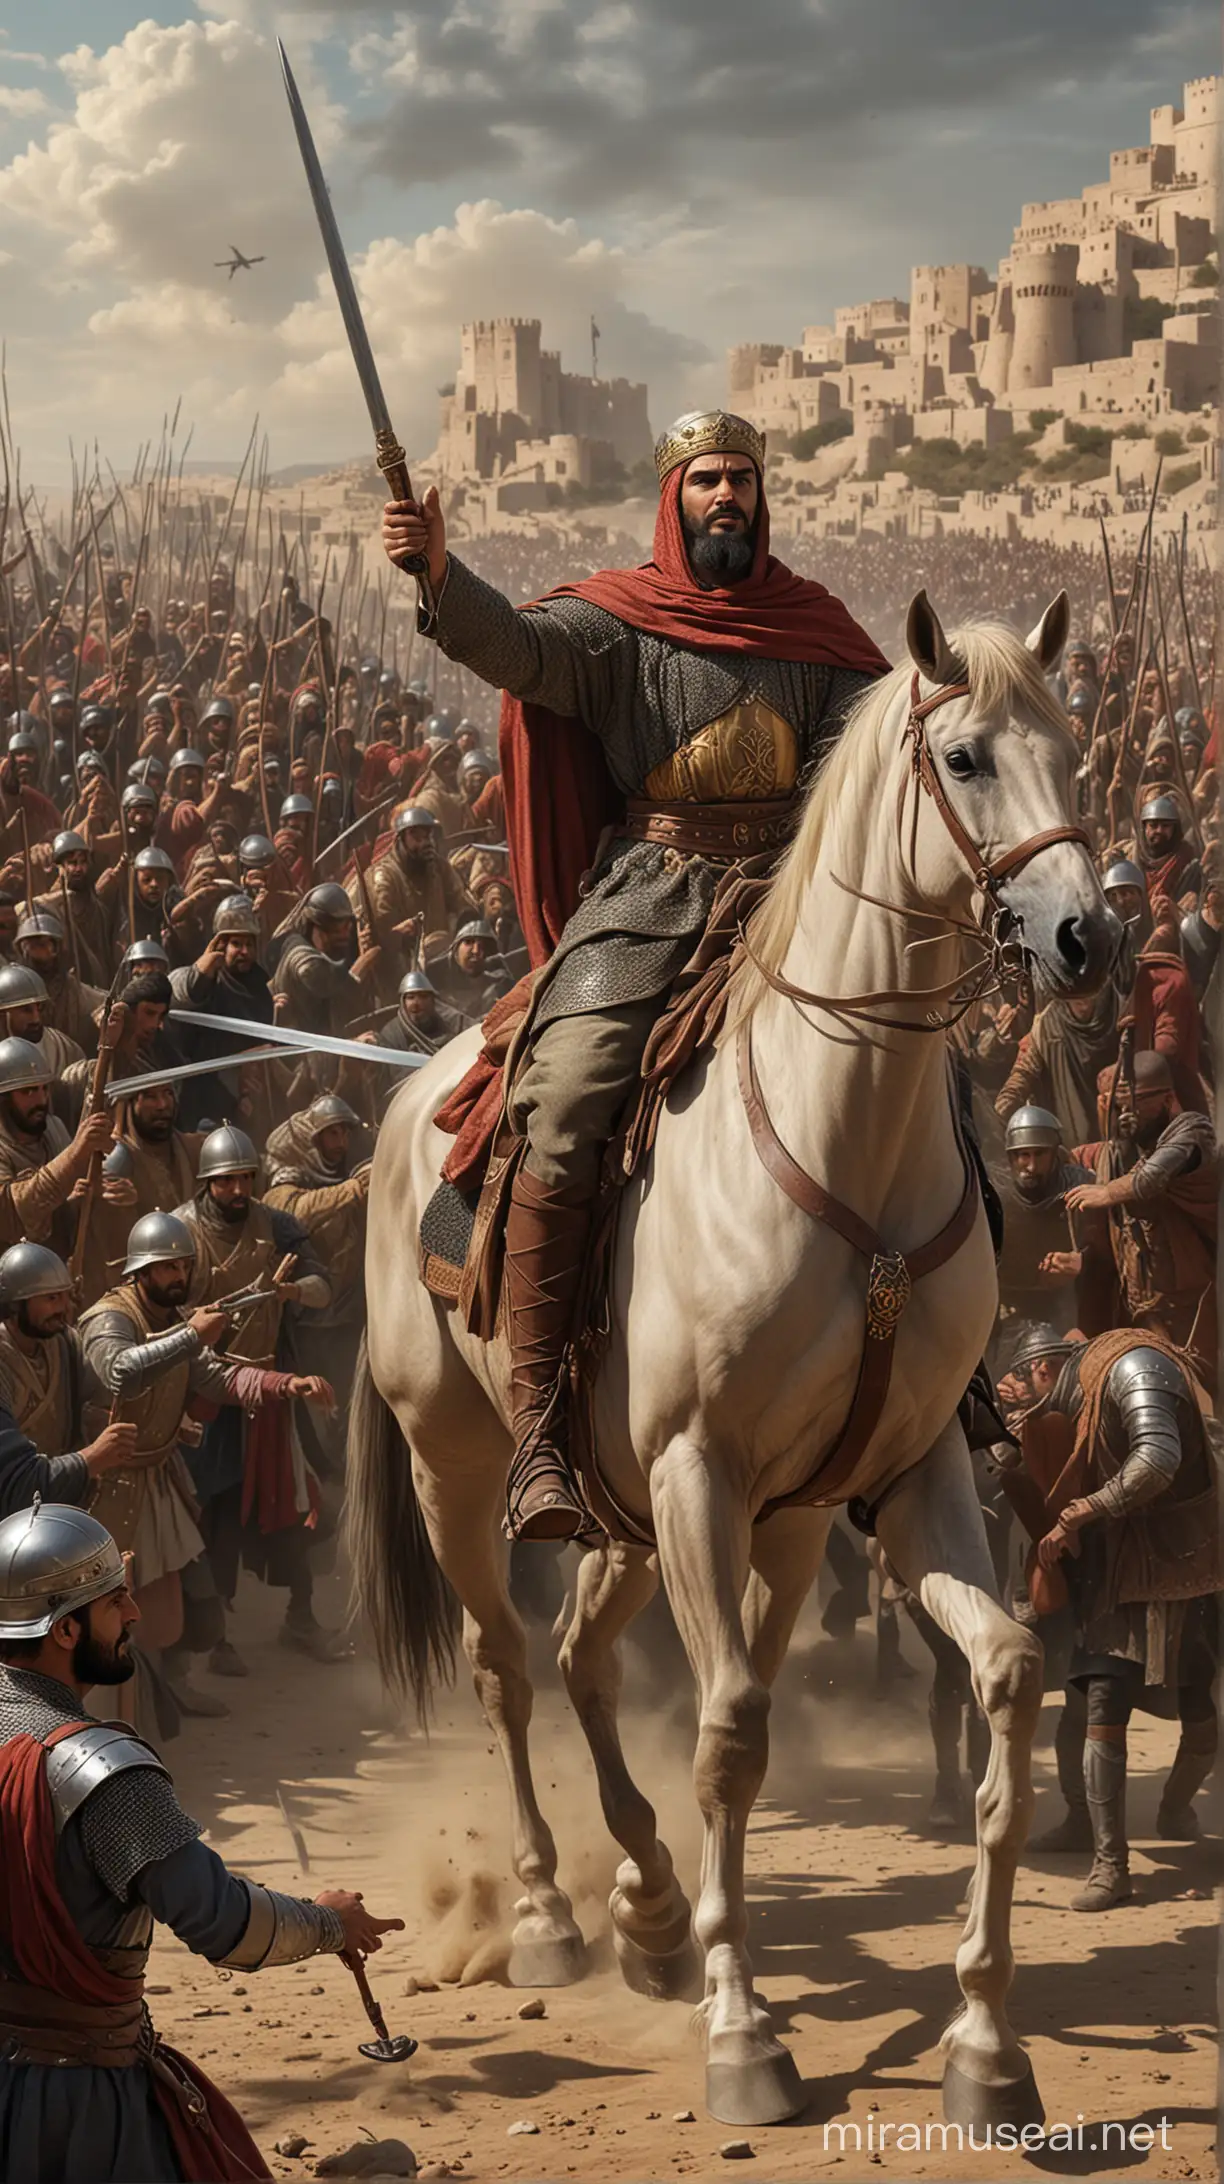 Tariq bin Ziyad facing a larger force led by King Roderick upon reaching Spain. Hyper realistic